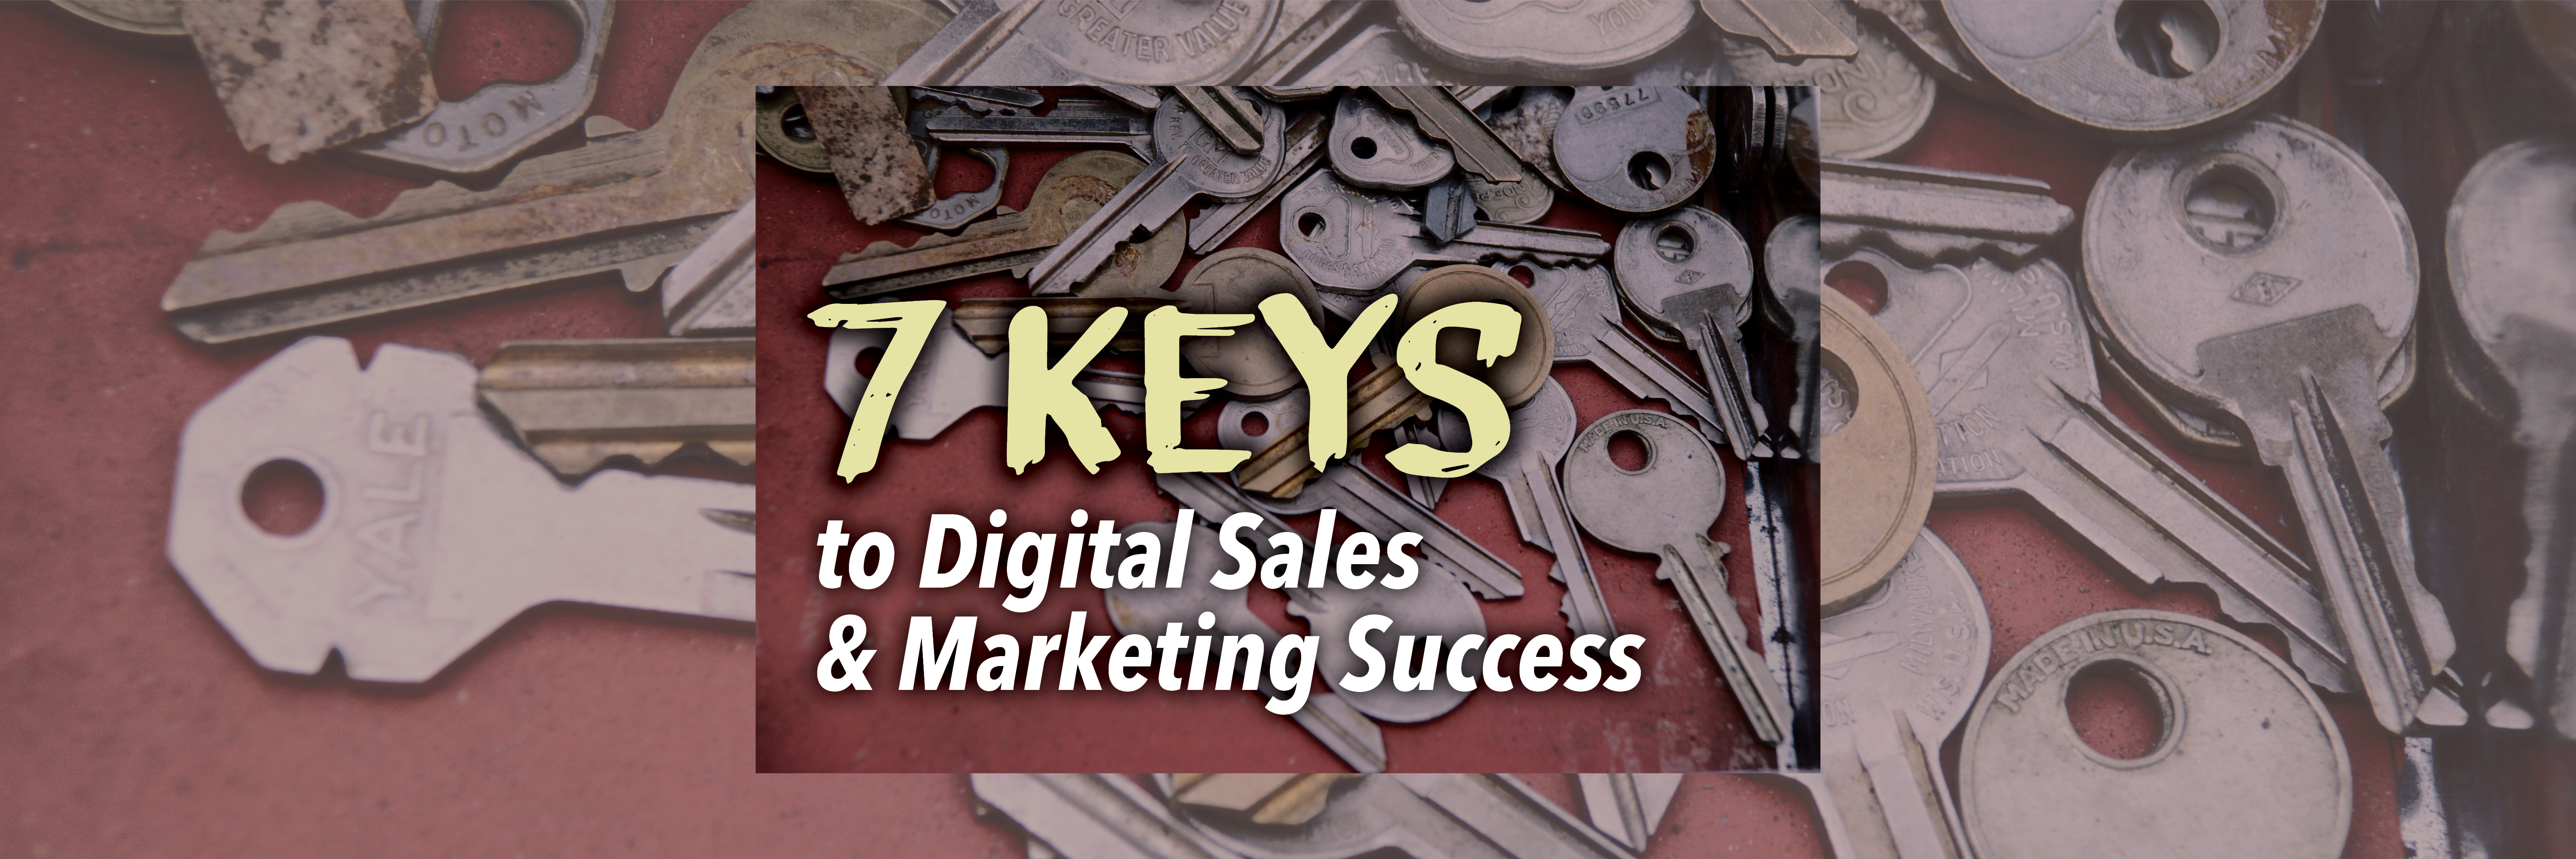 7 Keys to Digital Sales & Marketing Success